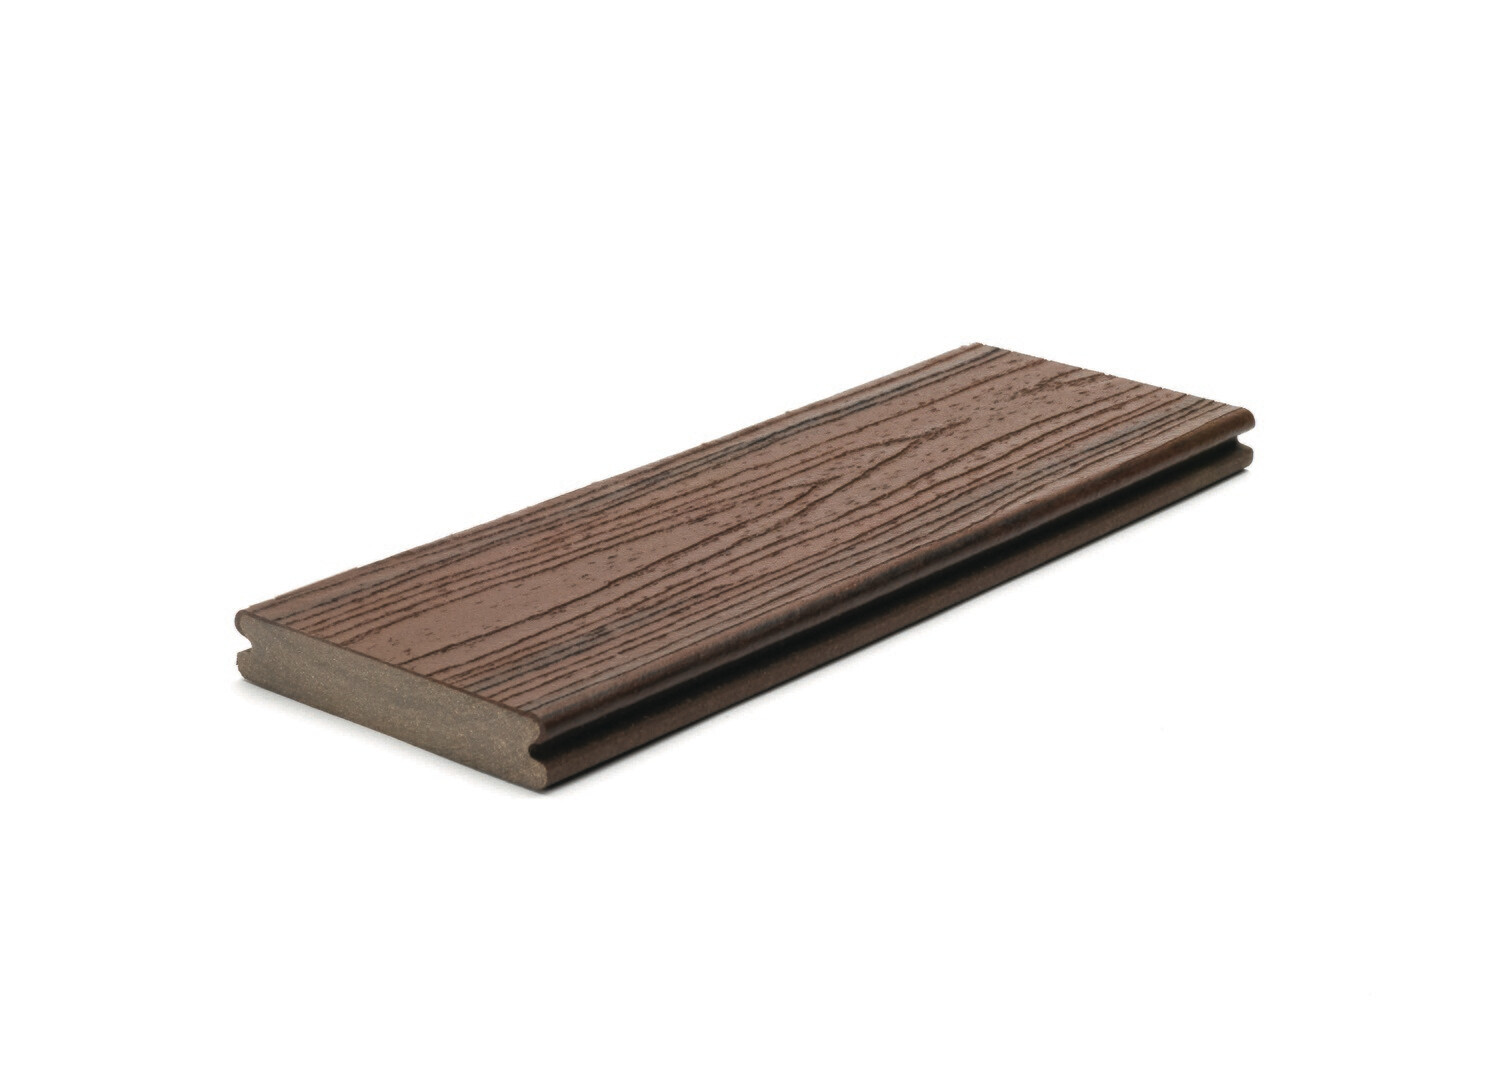 Lava Rock - Trex™ Transcend Deck board (Grooved)(25x140mm) - 3.6m Lengths